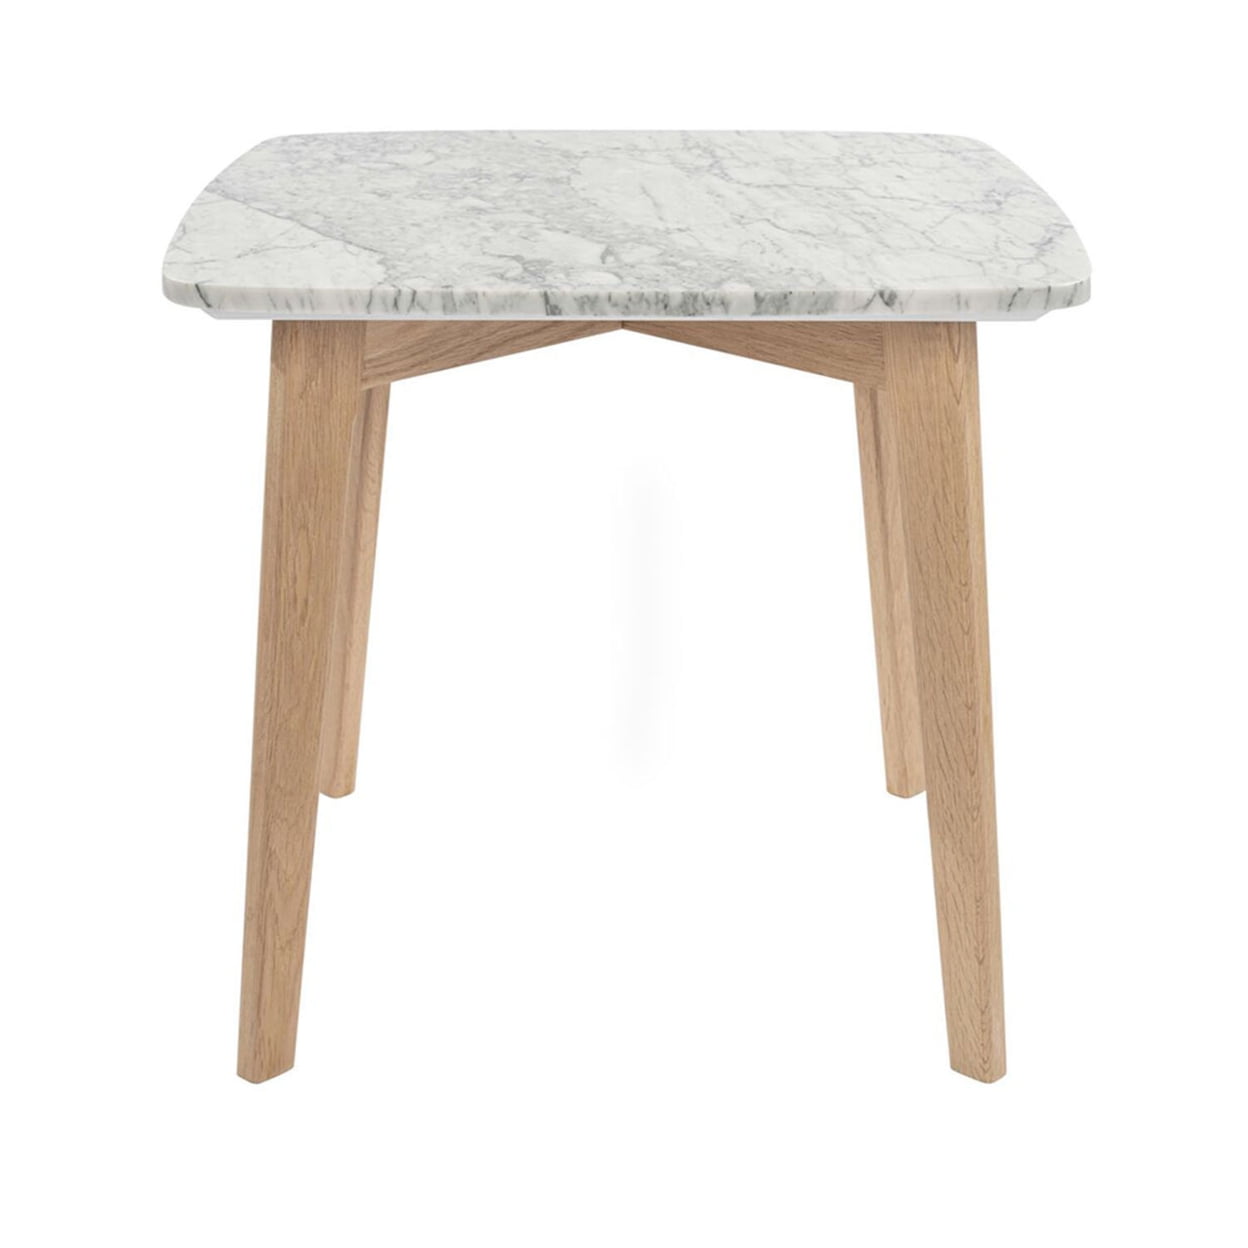 Tbc-4064-pt1915-wht 19.5 In. Gavia Square Italian Carrara White Marble Side Table With Oak Legs